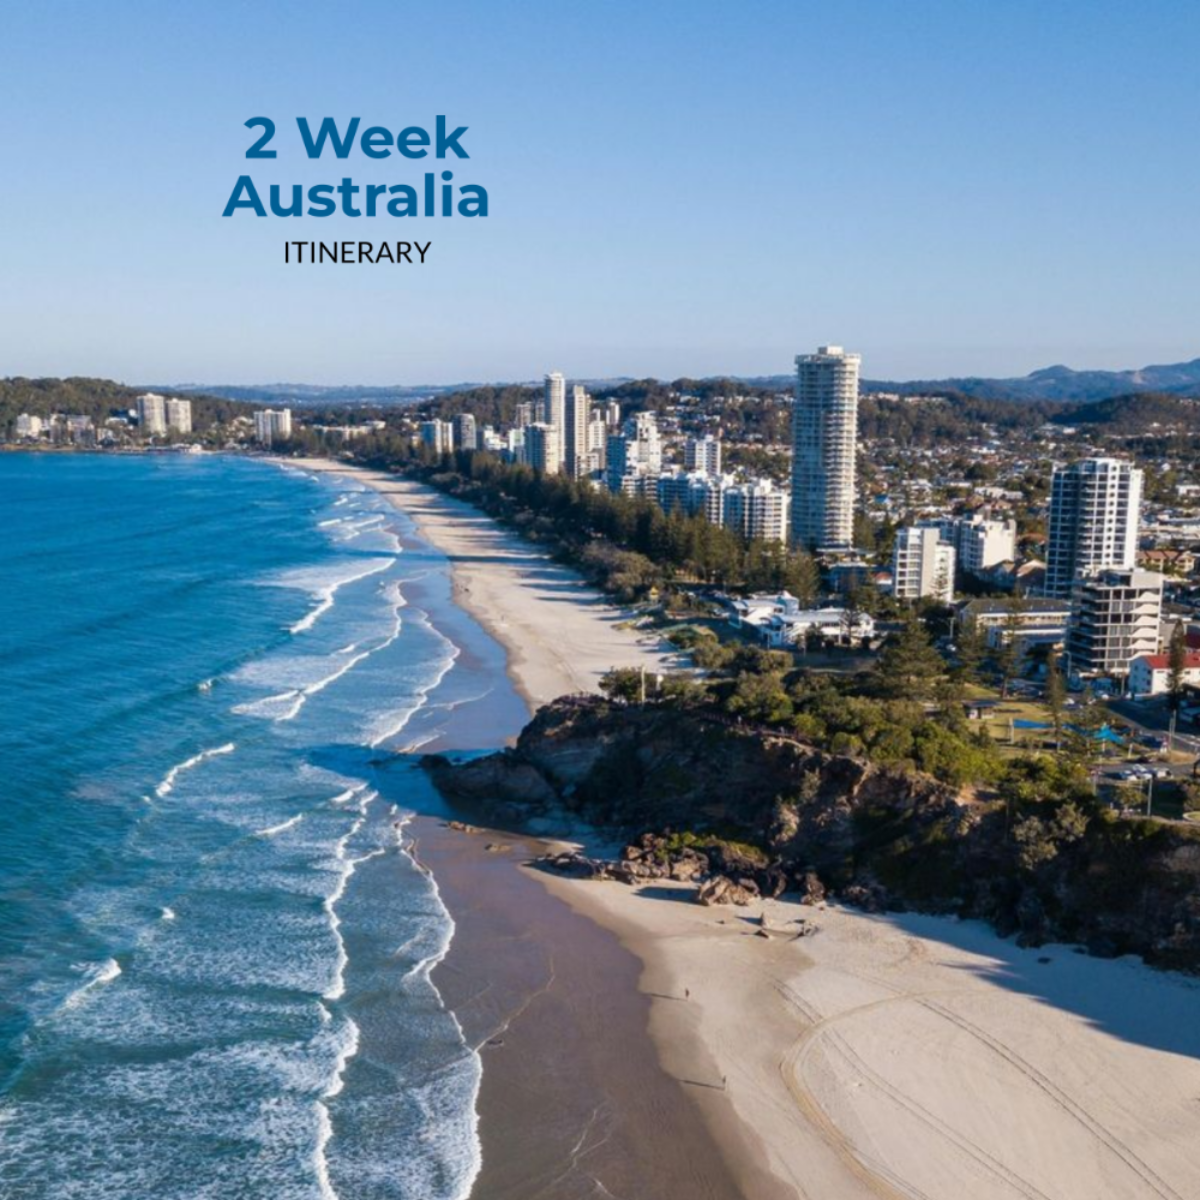 2 Week Australia Itinerary Template